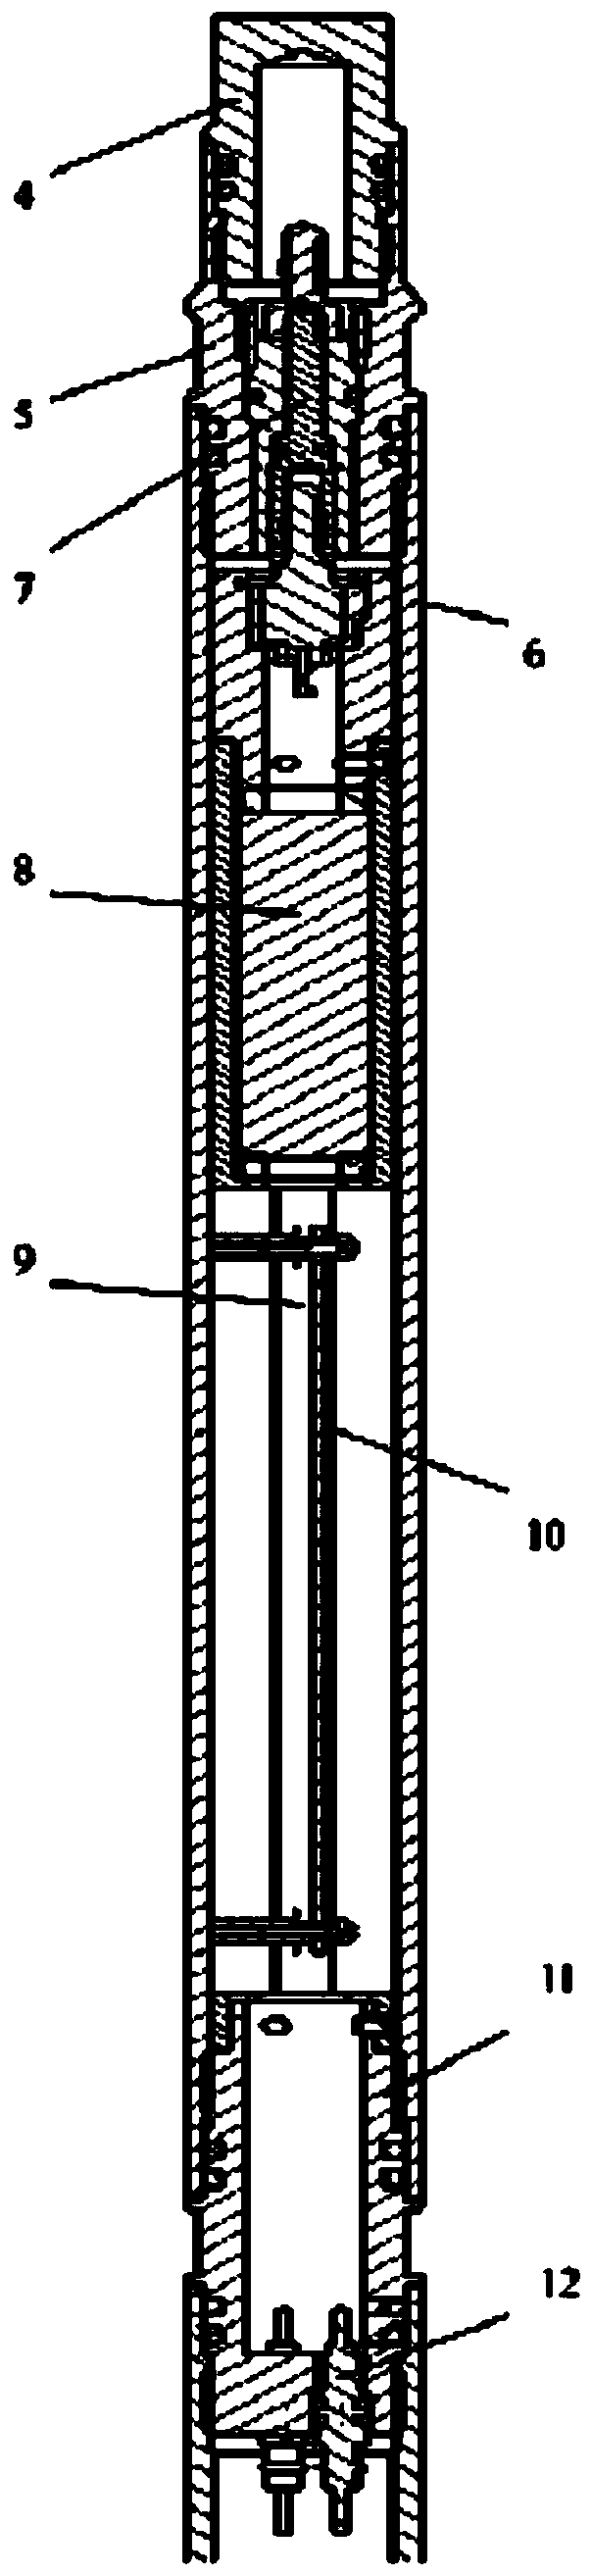 Pushing-leaning type three-arm temperature logging instrument